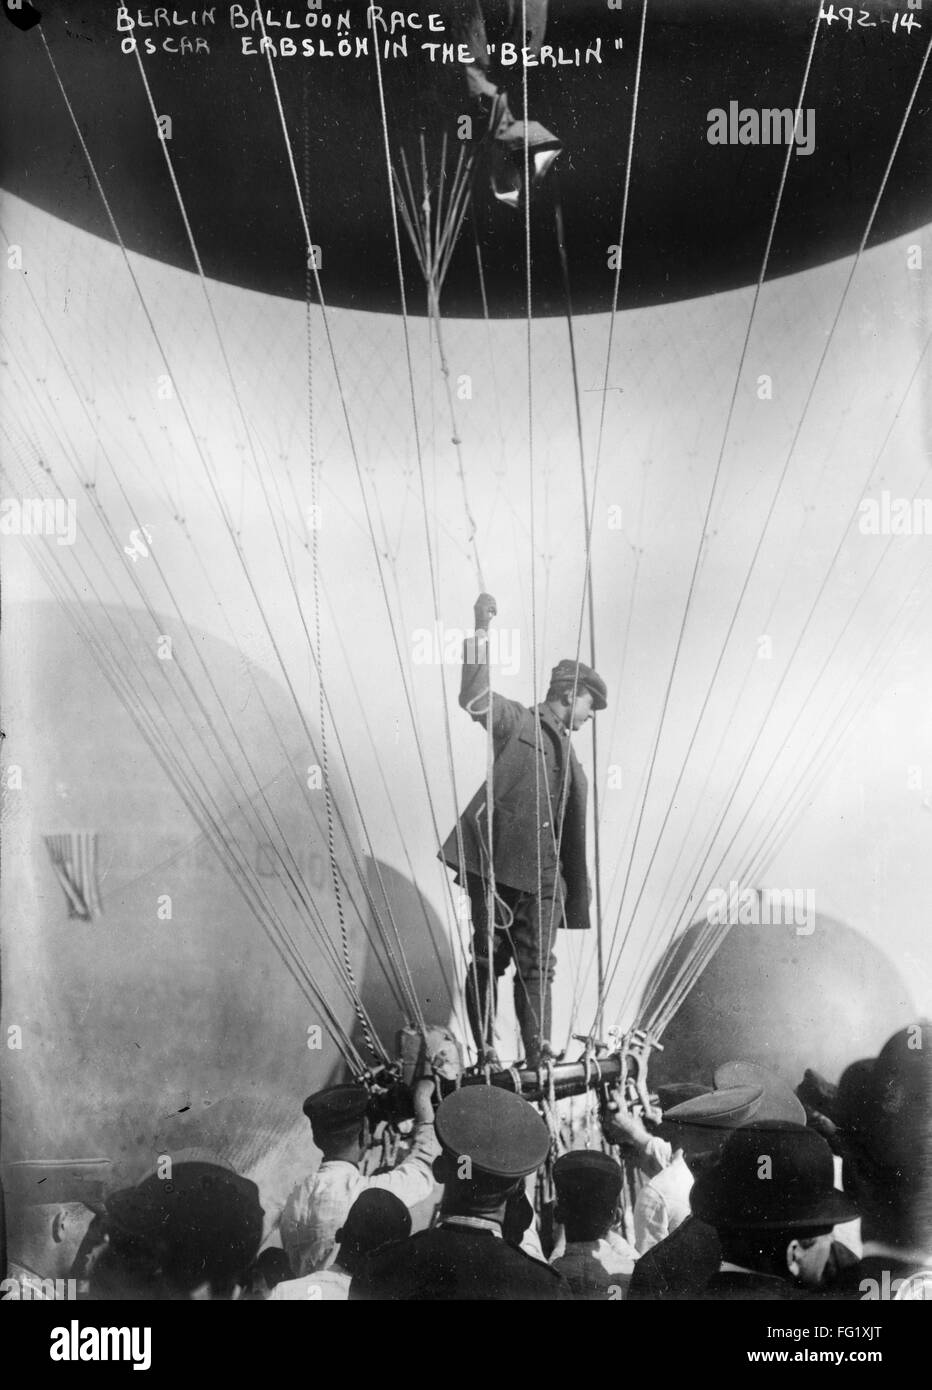 BERLIN: BALLON-WETTFAHRT, 1908. /nGerman Flieger Oscar Erbsloh im Heißluft- Ballon "Berlin" kurz vor einem Rennen in Berlin, Deutschland. Fotografie,  1908 Stockfotografie - Alamy